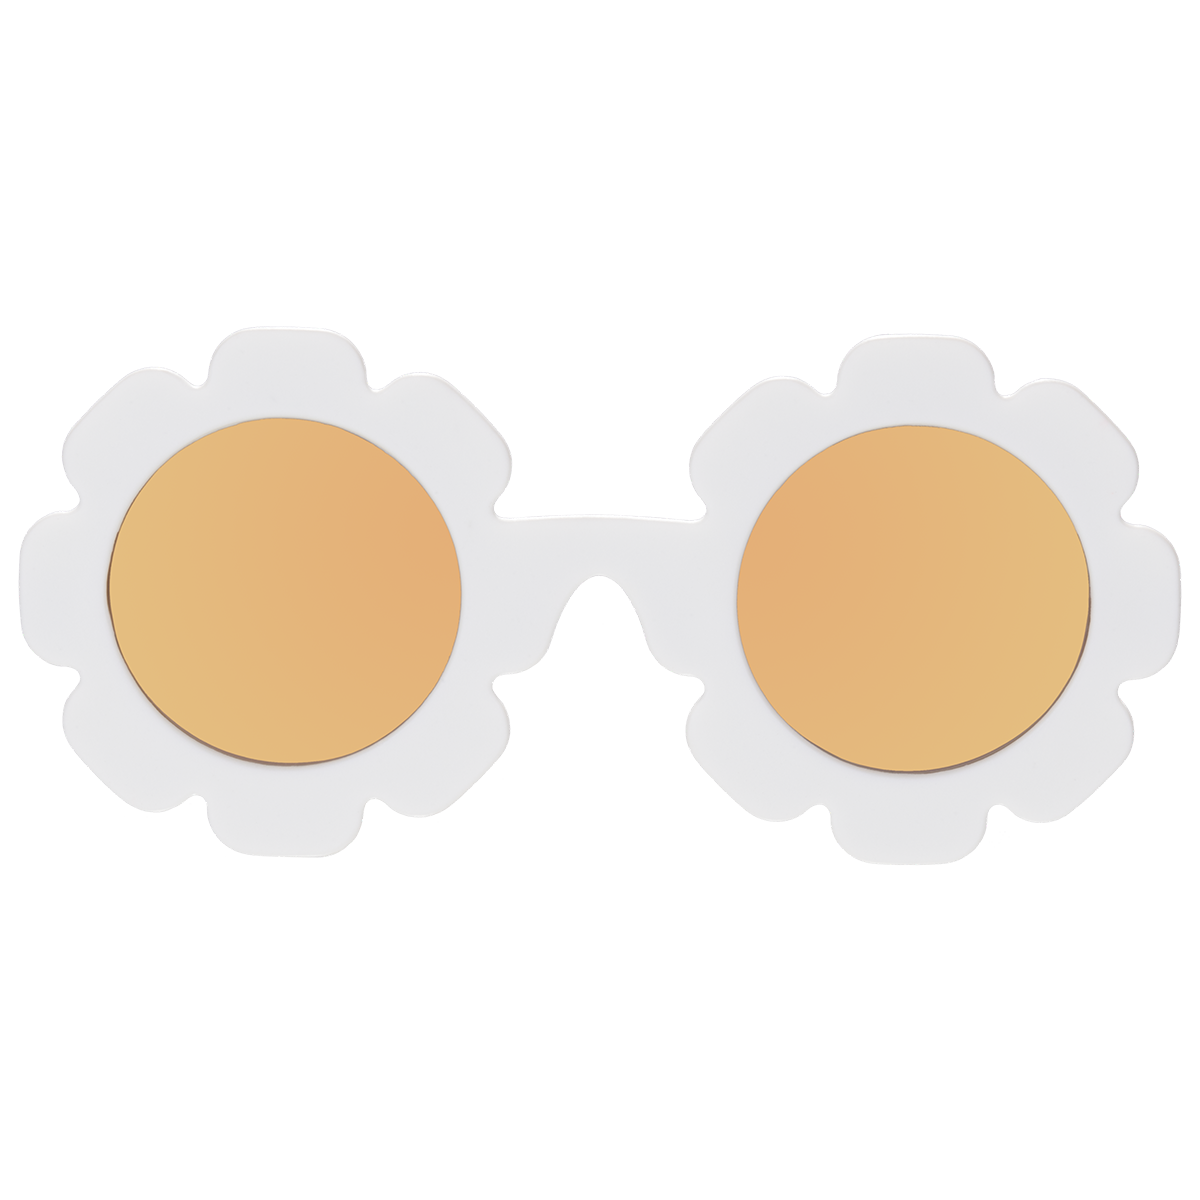 The Daisy- Polarized with Mirrored Lenses Babiators Sunglasses